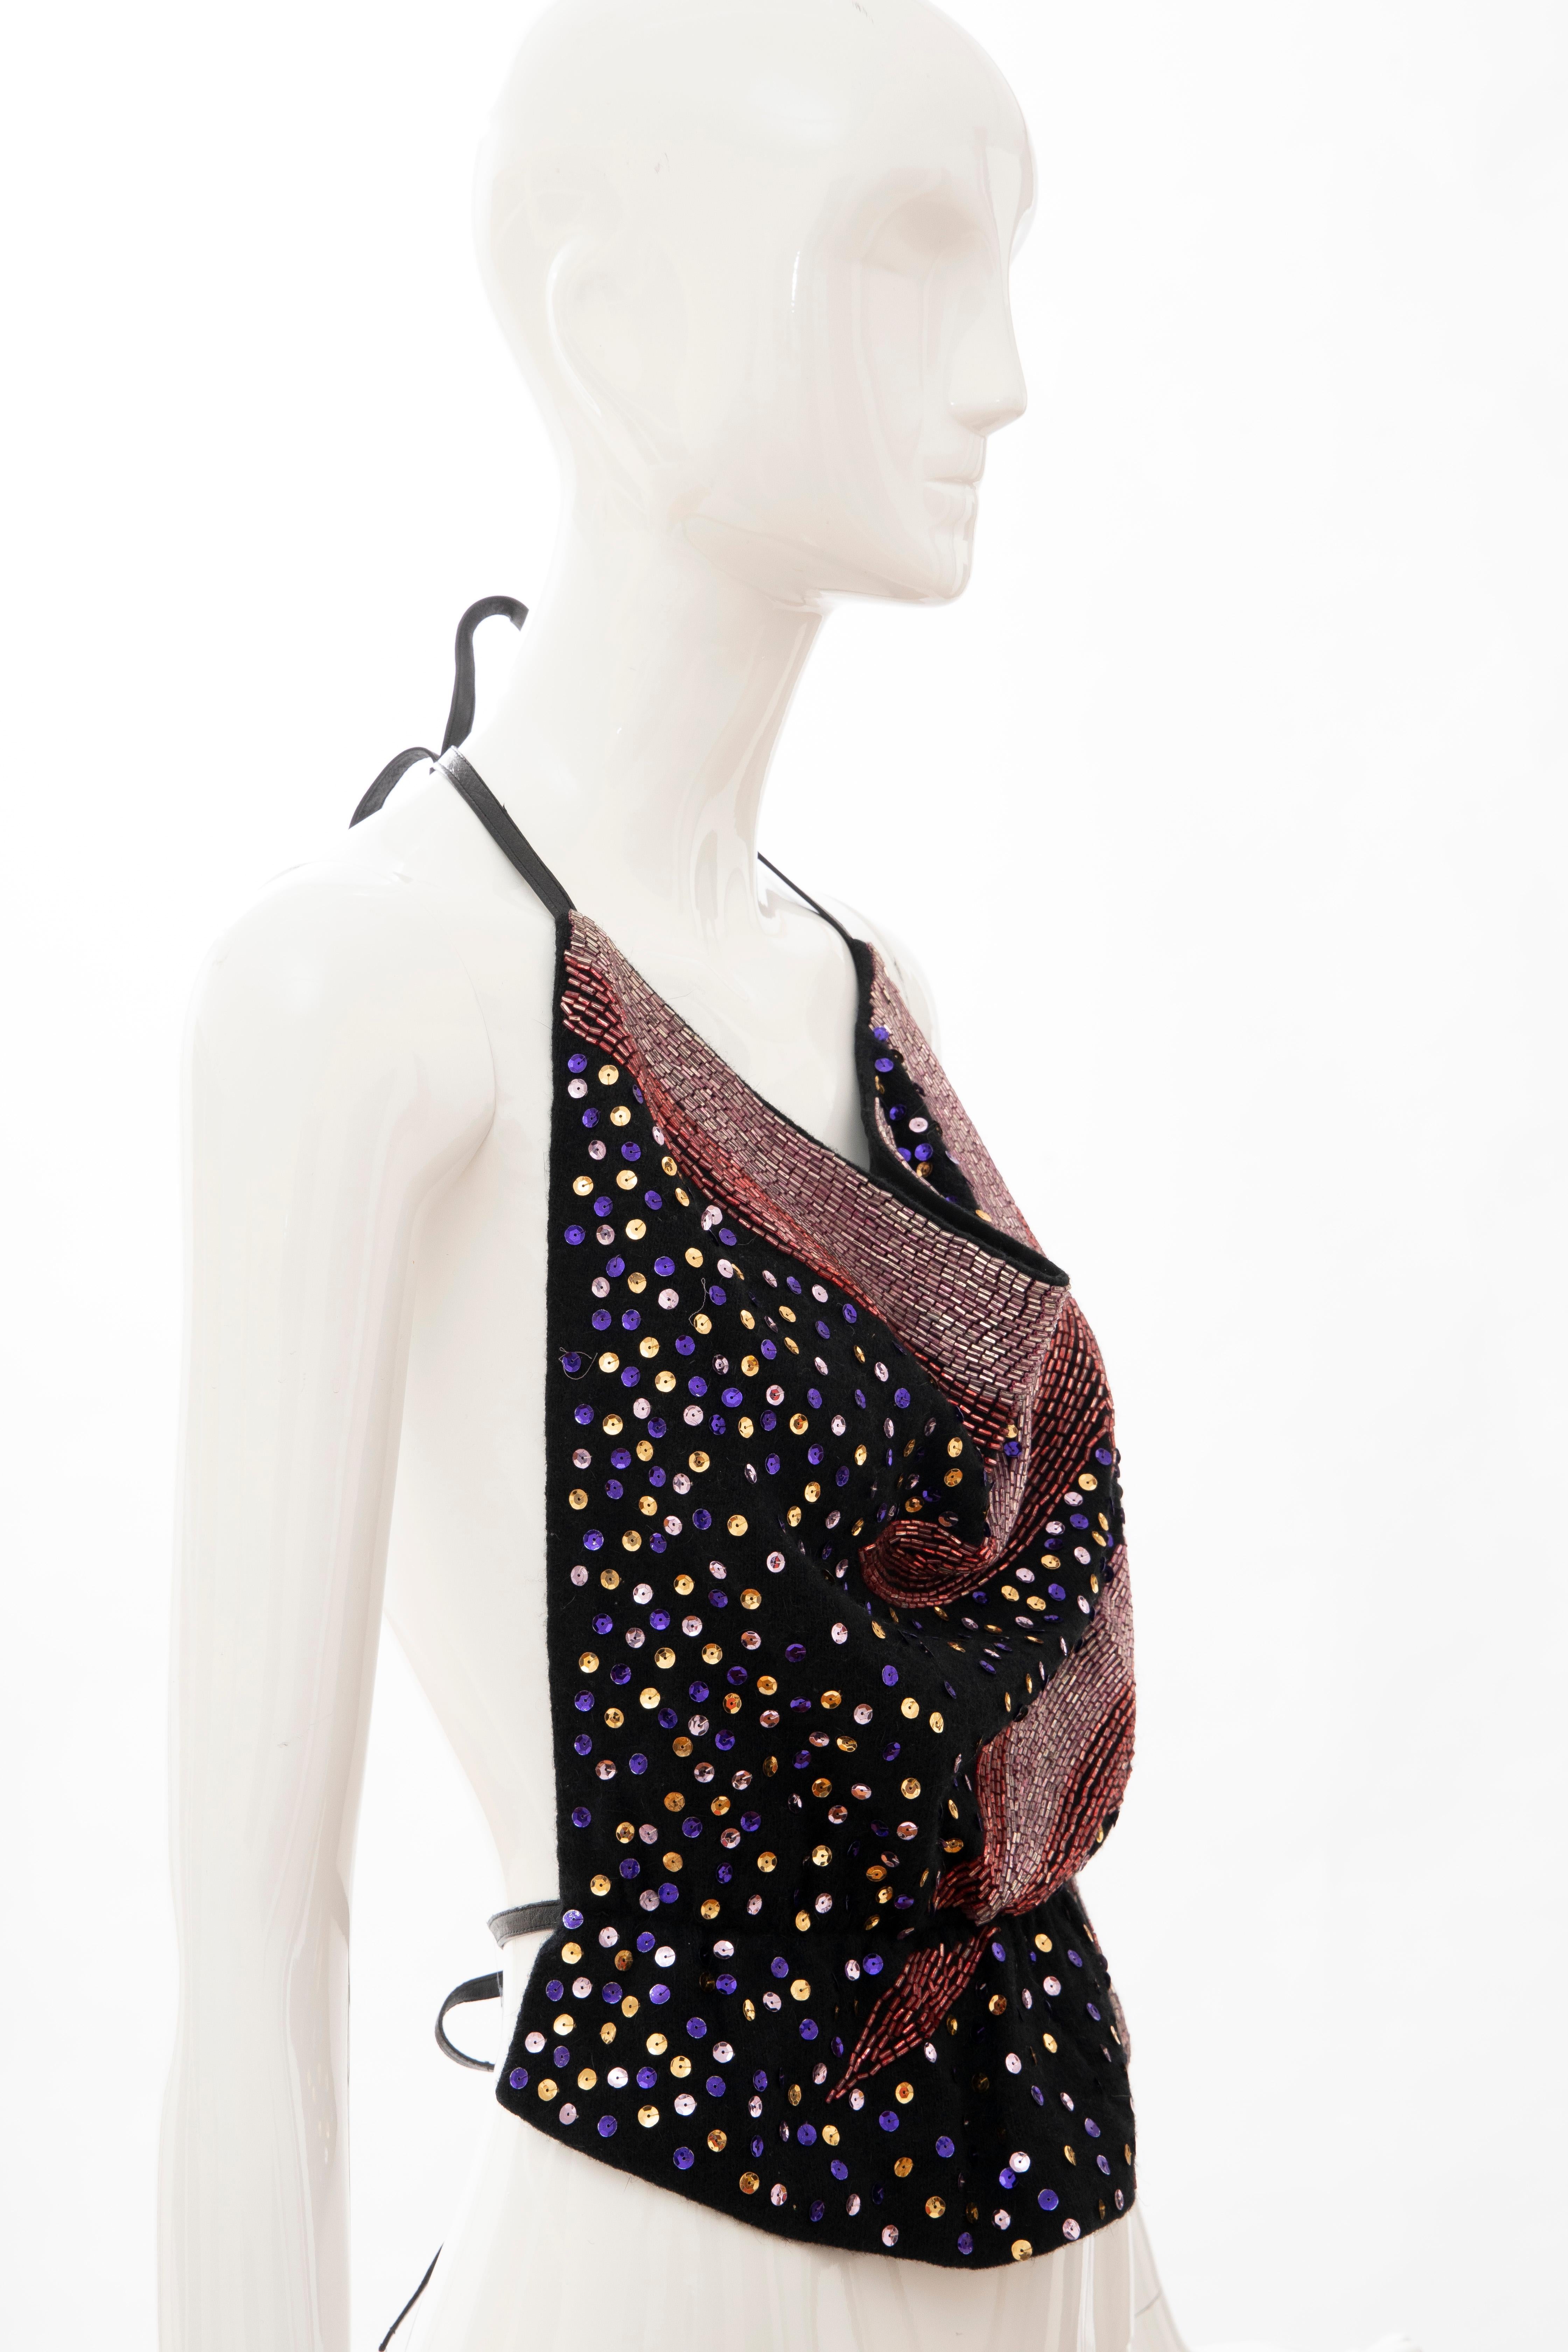 Stephen Burrows Black Wool Jersey Bugle Beads Sequins Halter Top, Circa: 1970's 1